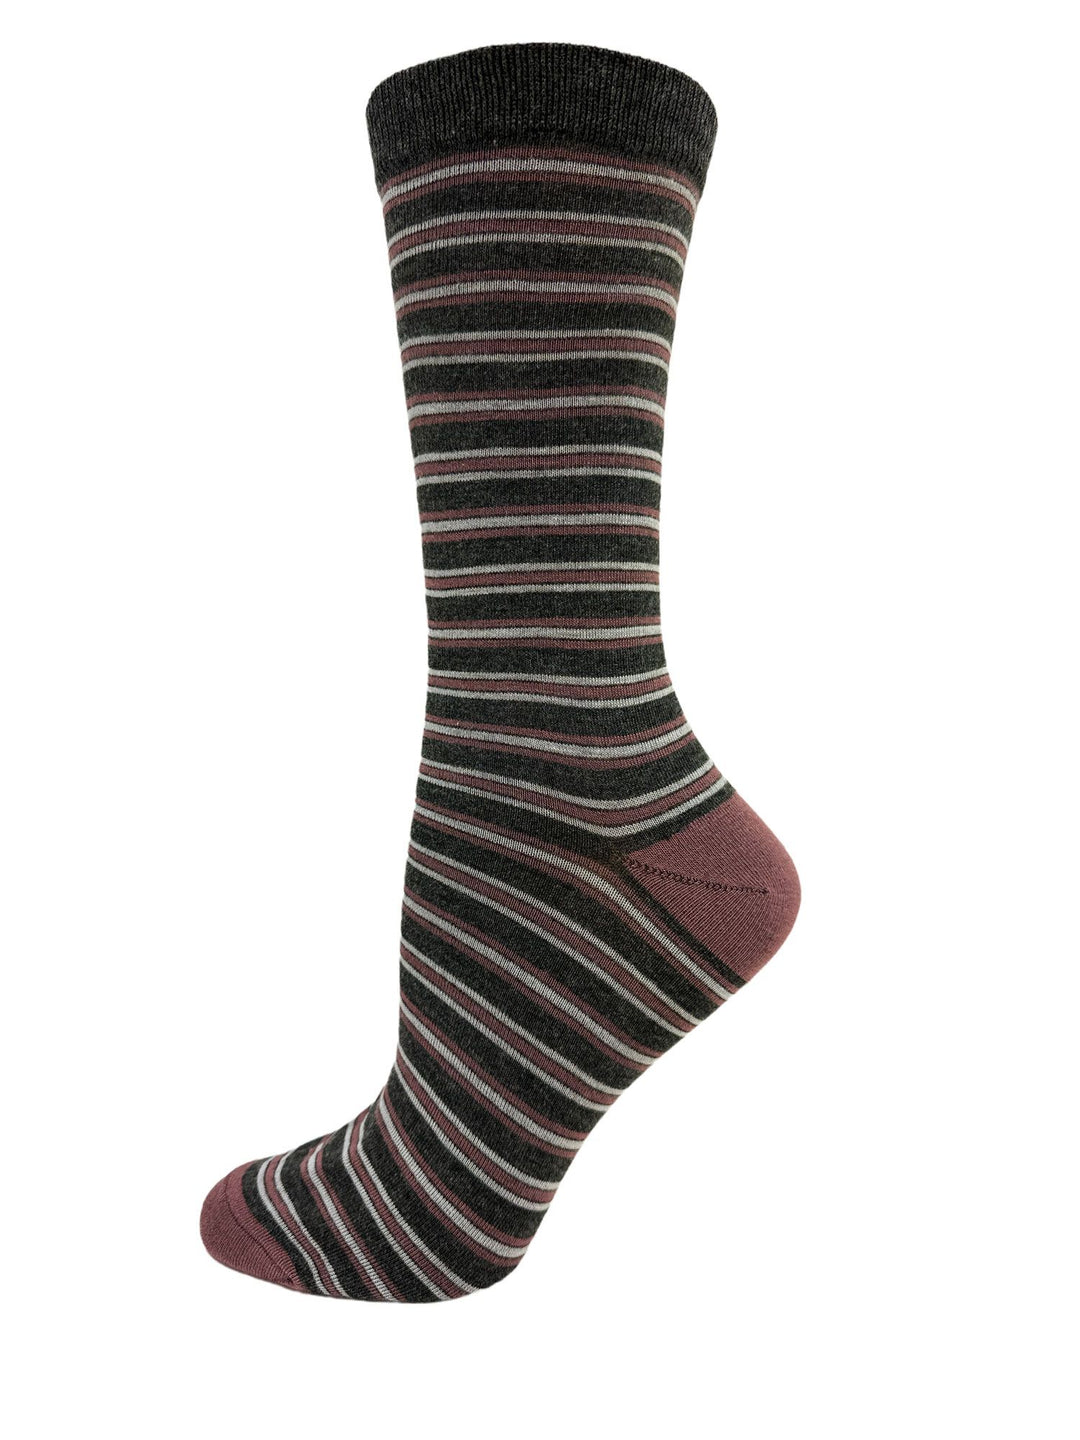 "Dusty Pink Stripe" Bamboo Socks by Point Zero - Medium